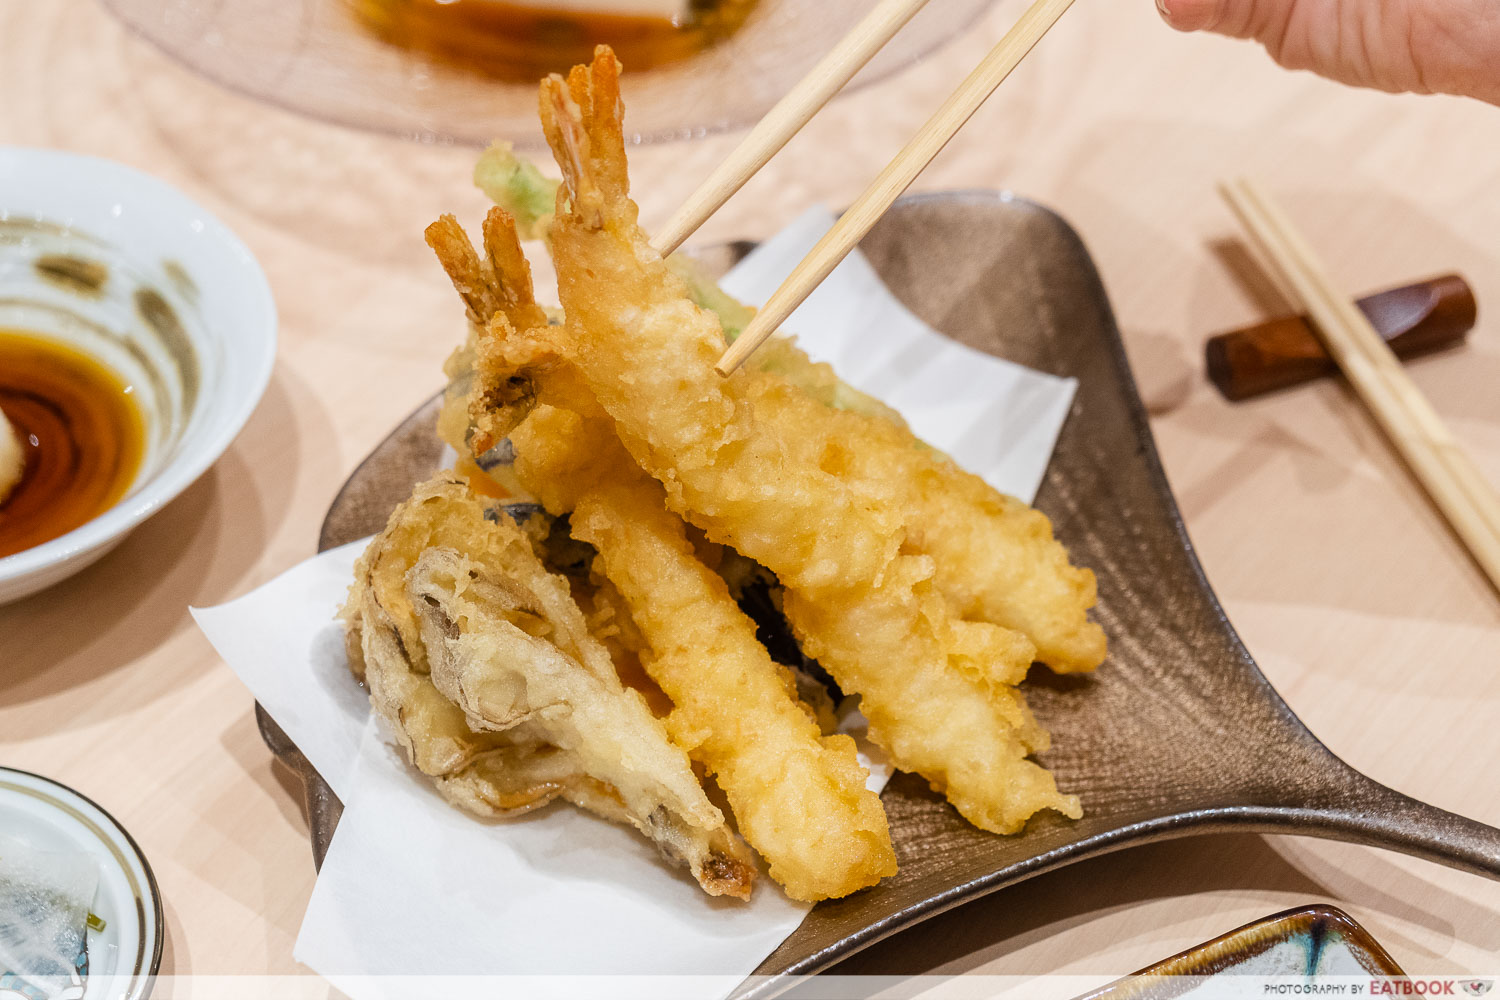 tempura makino - tempura set